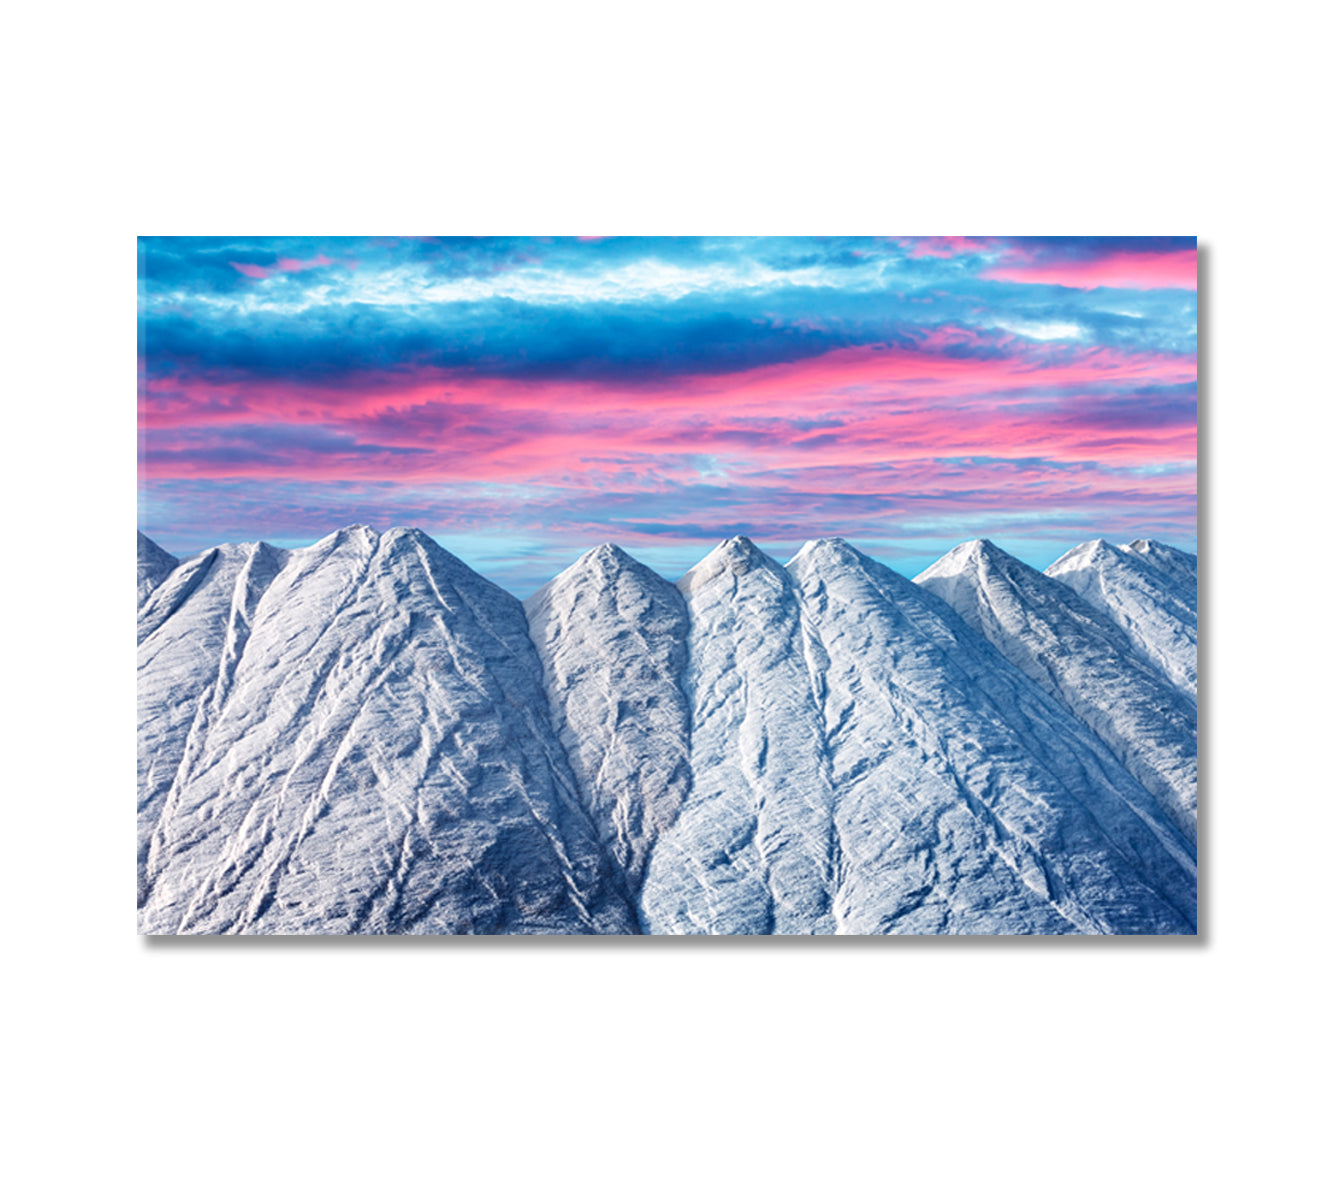 Pile of Salt with Purple Sunset Canvas Print-Canvas Print-CetArt-1 Panel-24x16 inches-CetArt